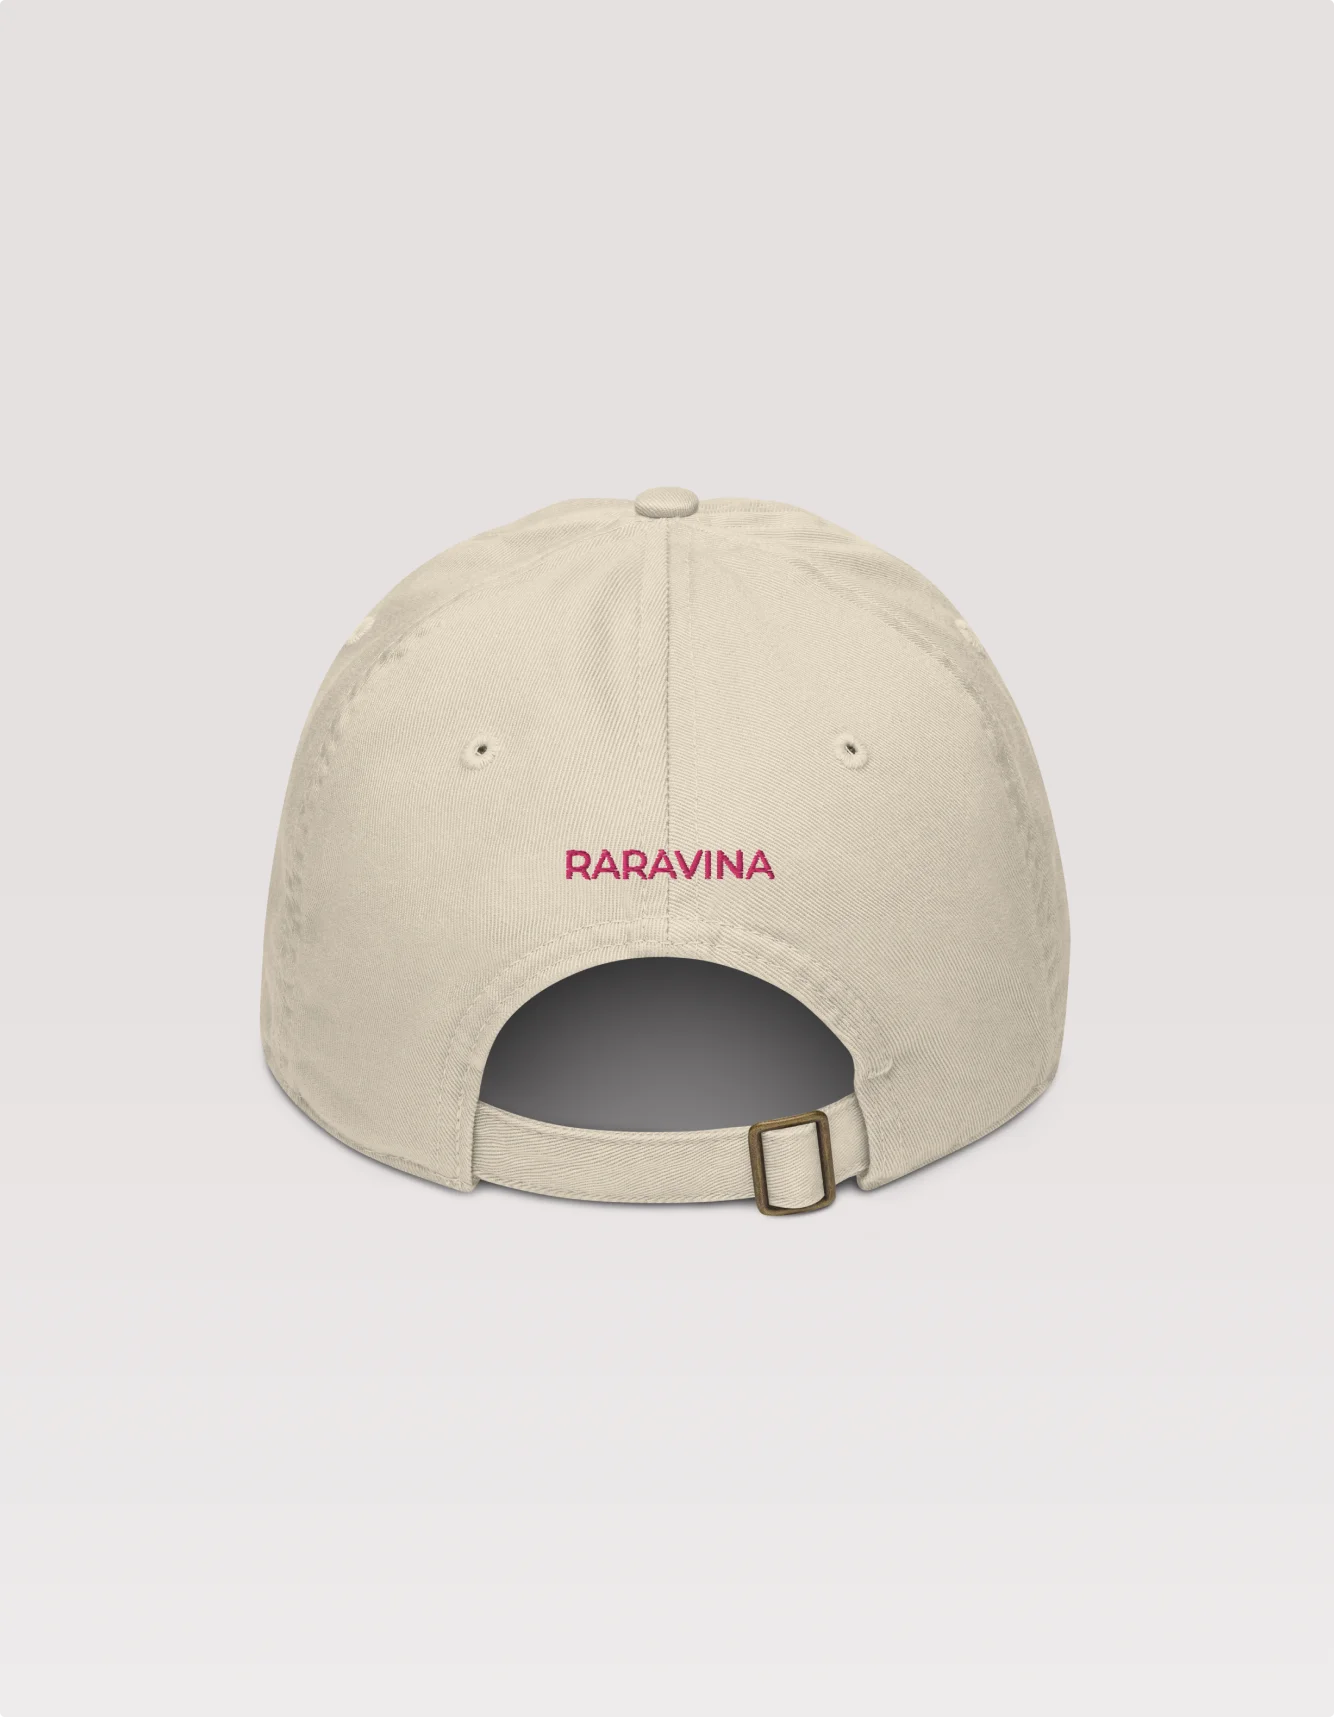 Raravina Chardonnay All Day Slogan Baseball Hat